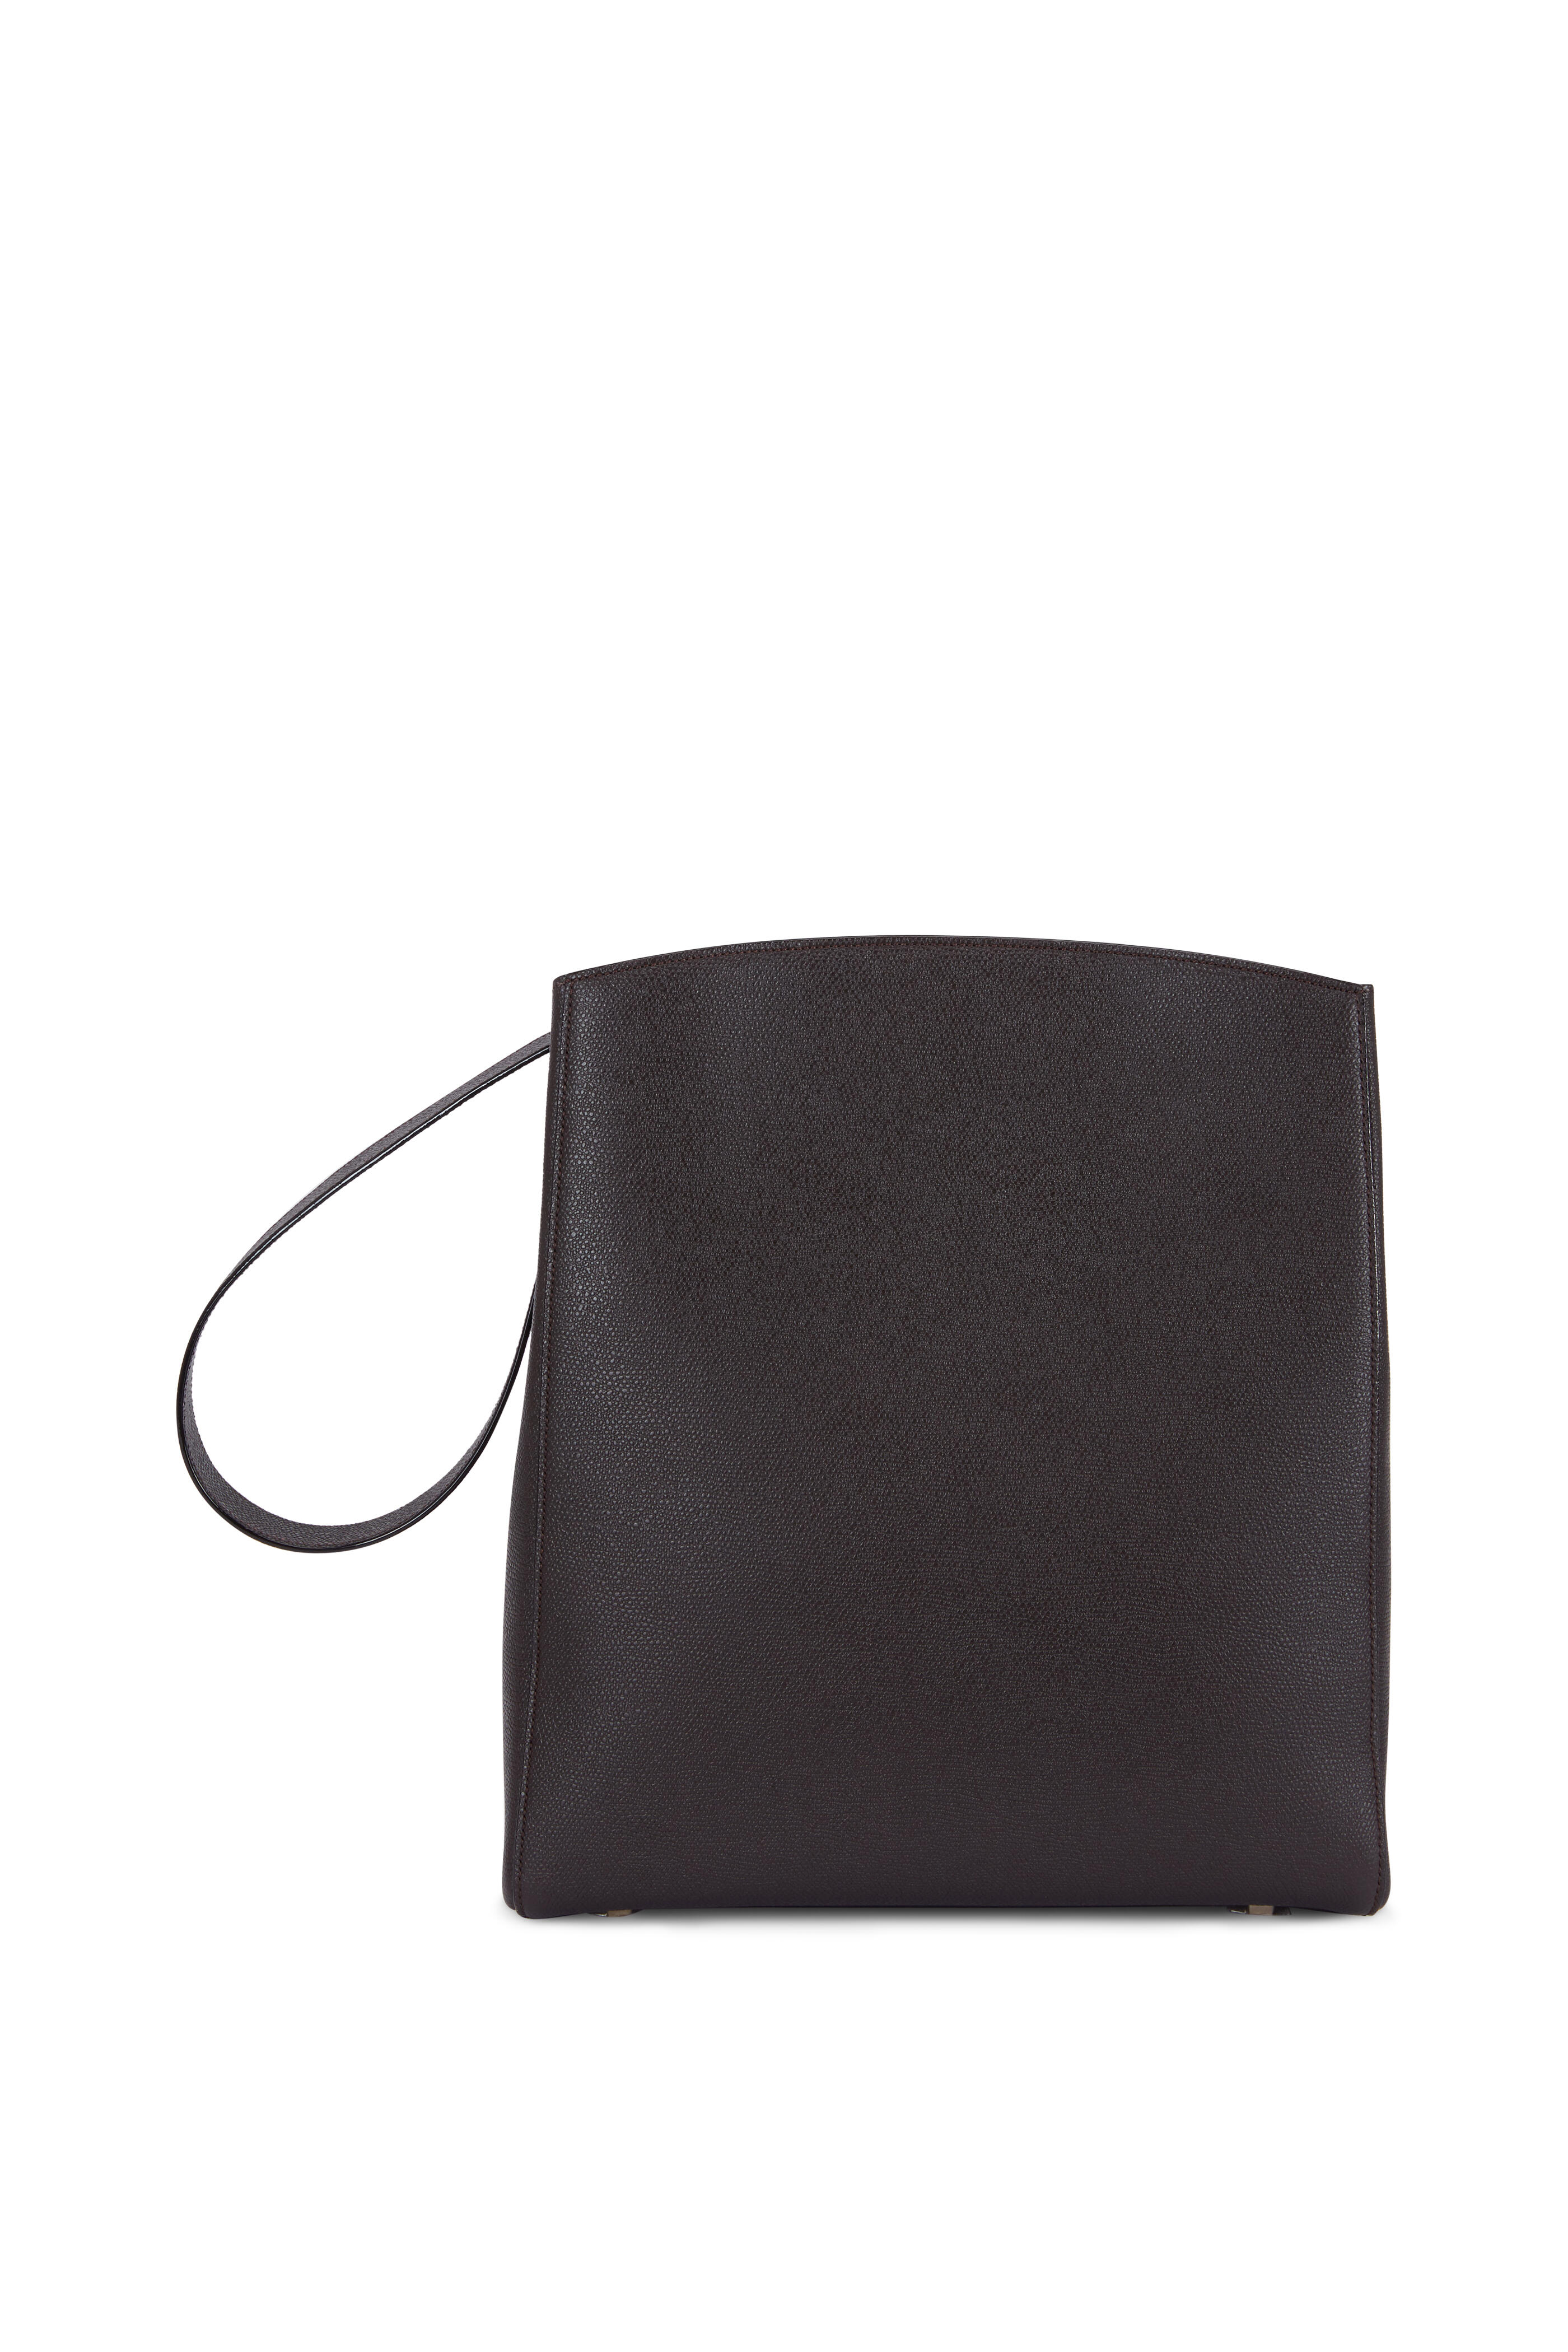 BRERA ITALY BLACK LEATHER SHOULDER BAG  Leather shoulder bag, Shoulder bag,  Brown leather purses